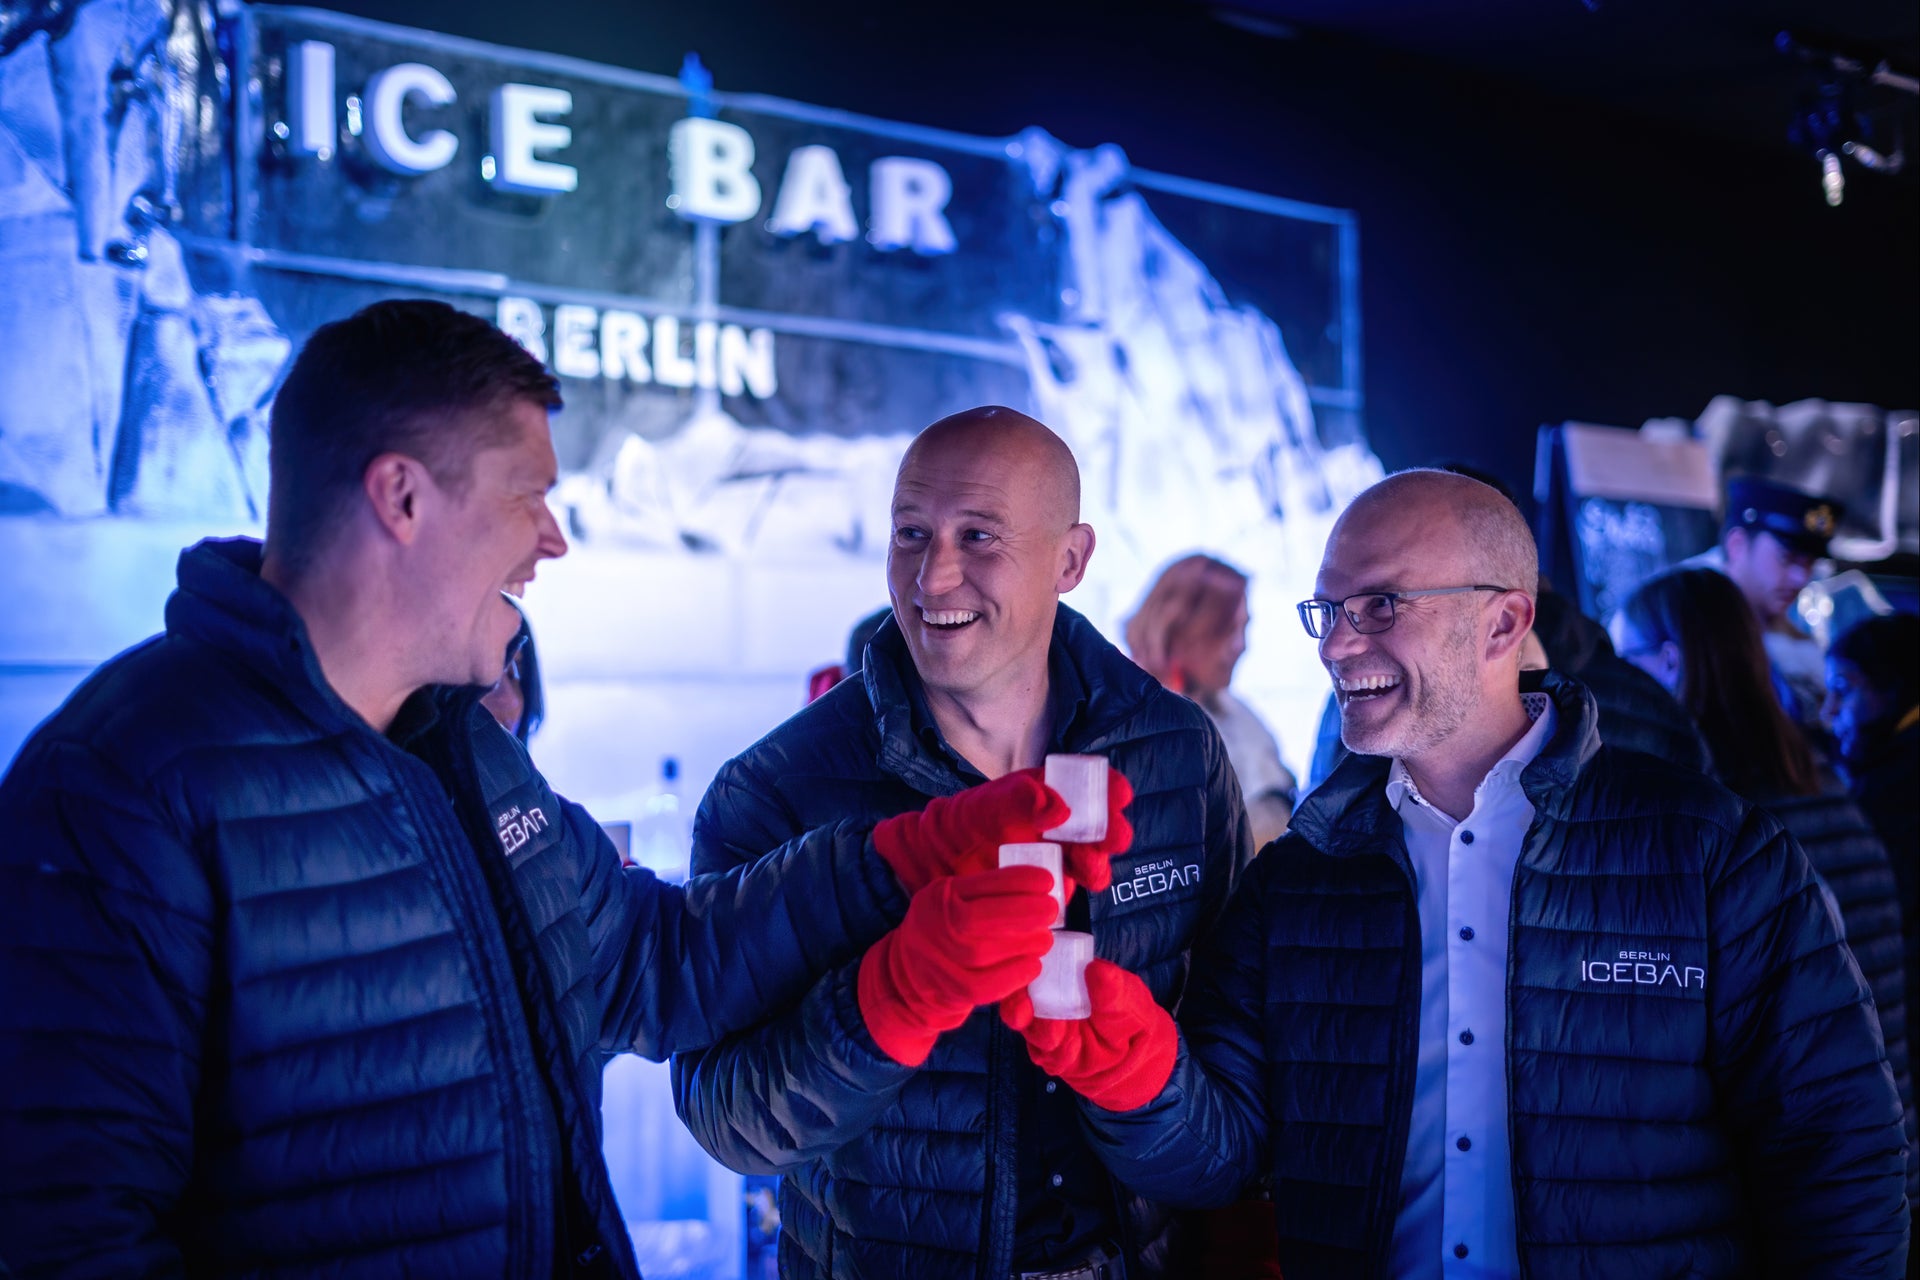 Entrada al Icebar Berlín